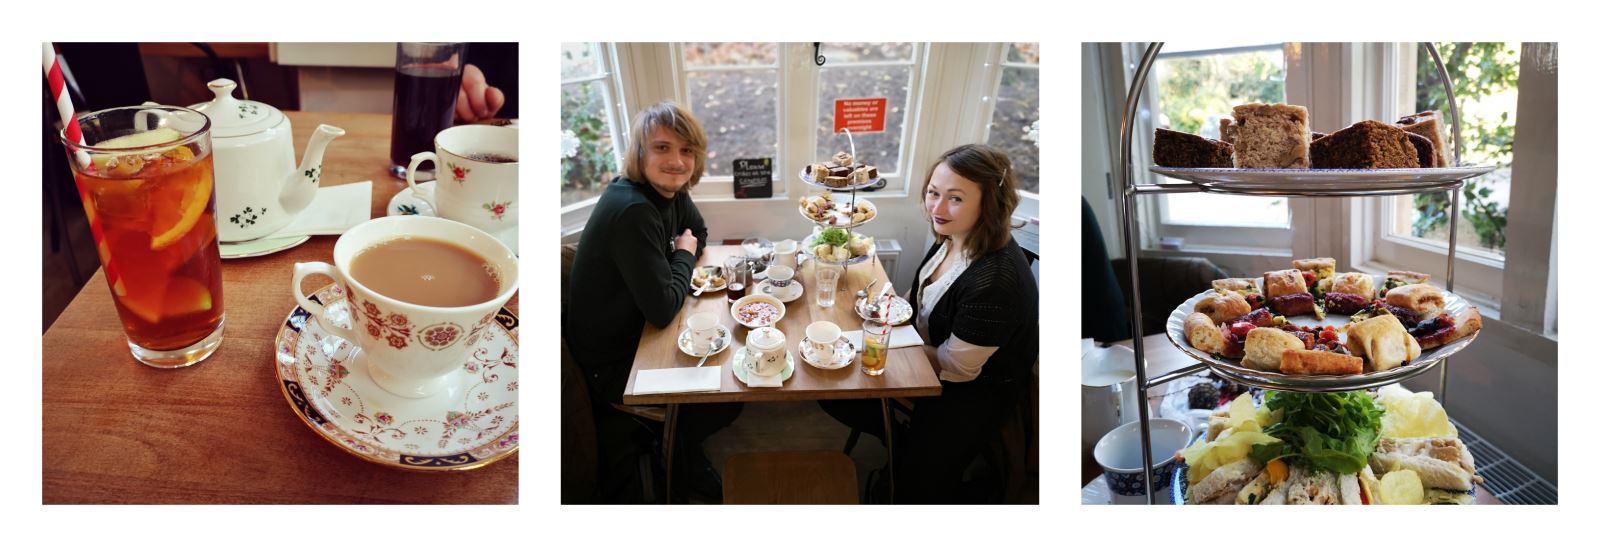 Afternoon Tea at the Arboretum Cafe | Visit Nottinghamshire